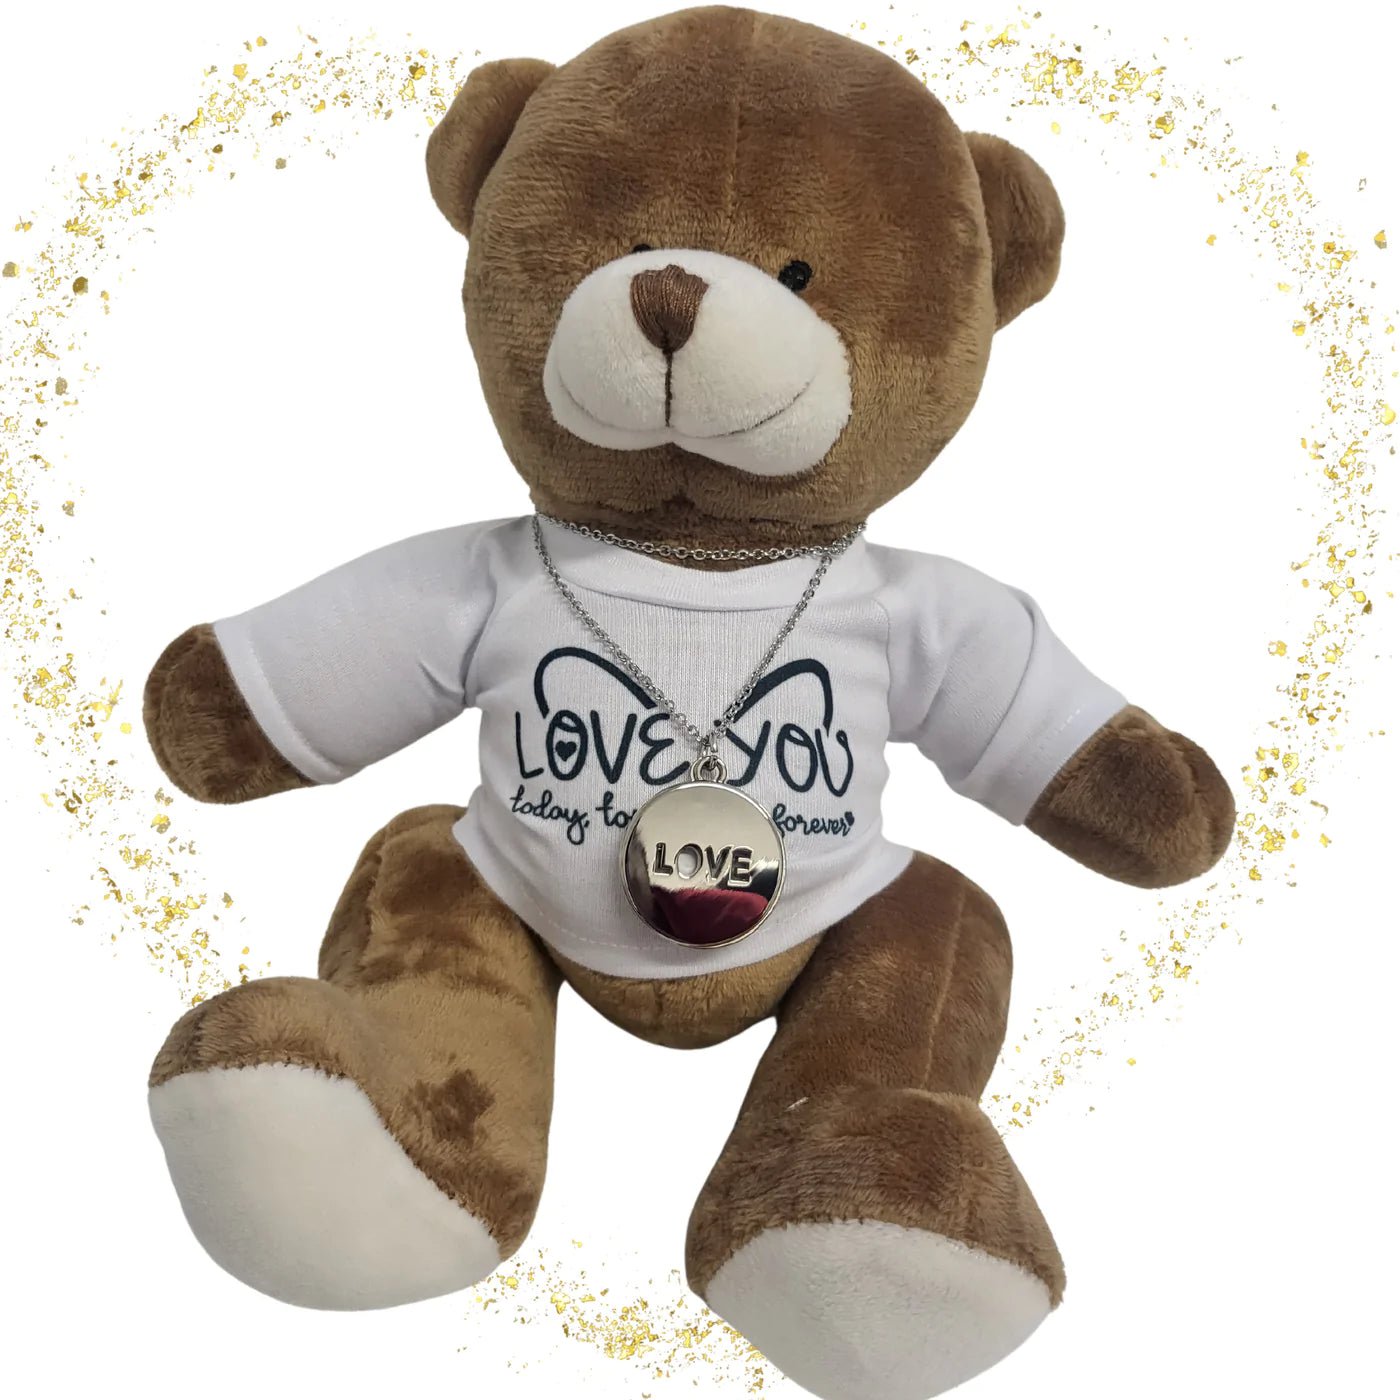 Pure Essence Greetings LOVE Teddy Bear and Photo Locket Necklace Gift Set - Stuffed & Plush Animals - British D'sire